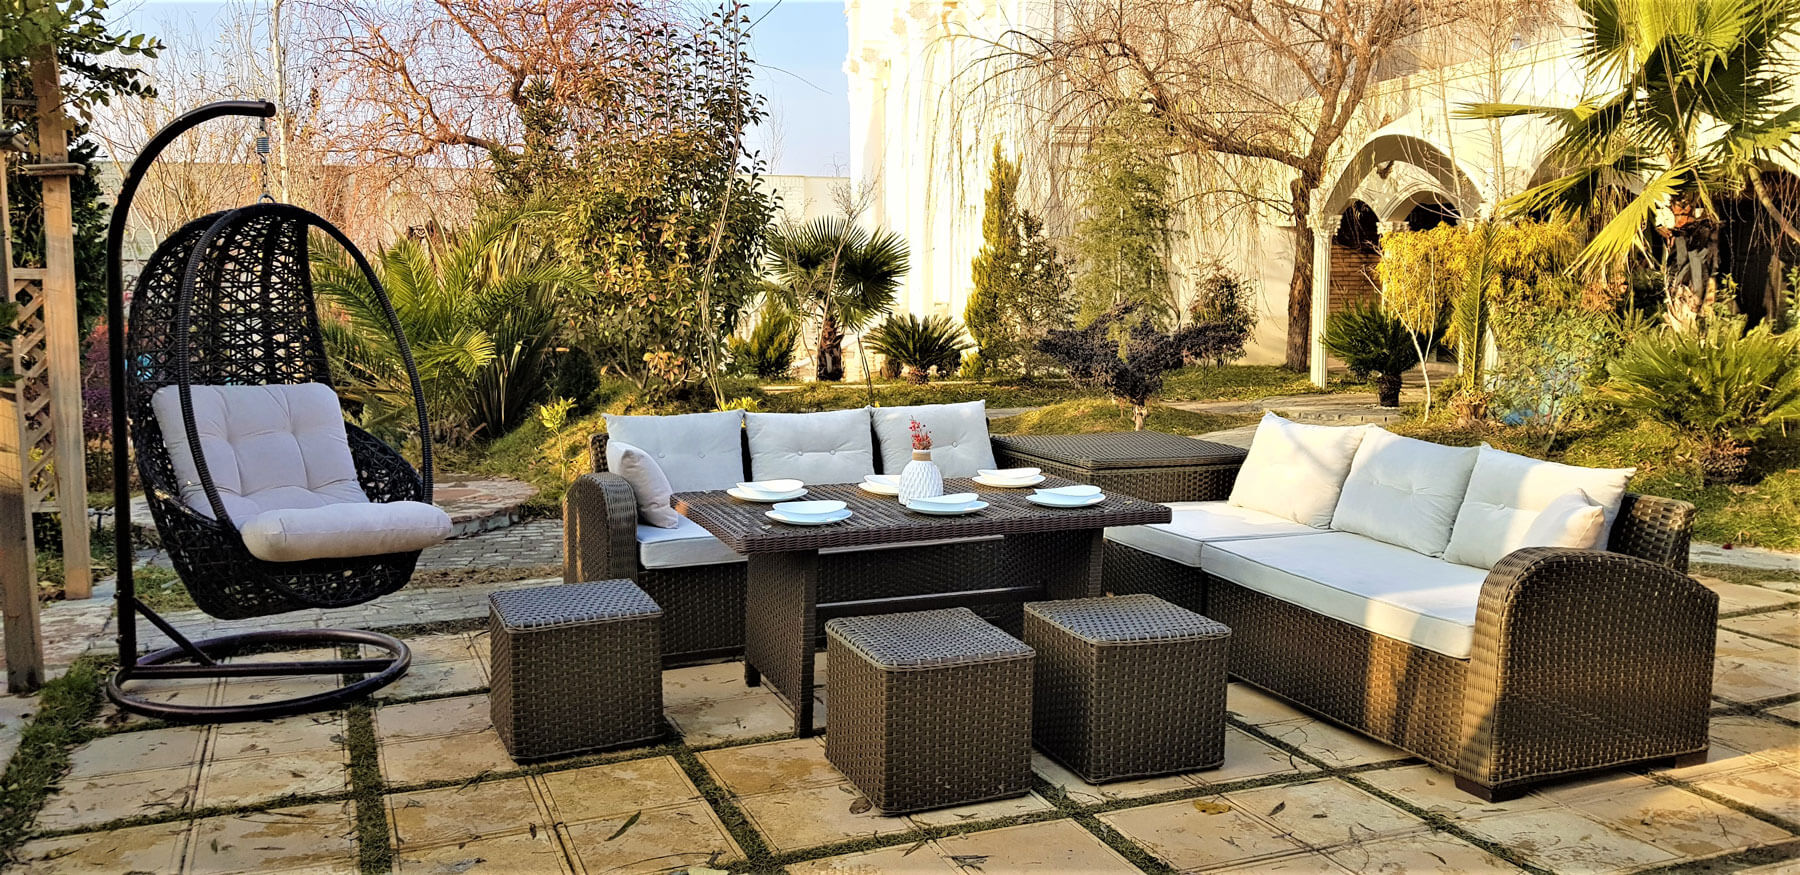 decorose patio conversation sets lavender model00 - ست صندلی حصیری محوطه مدل ارشمیدس -  - patio-conversation-sets